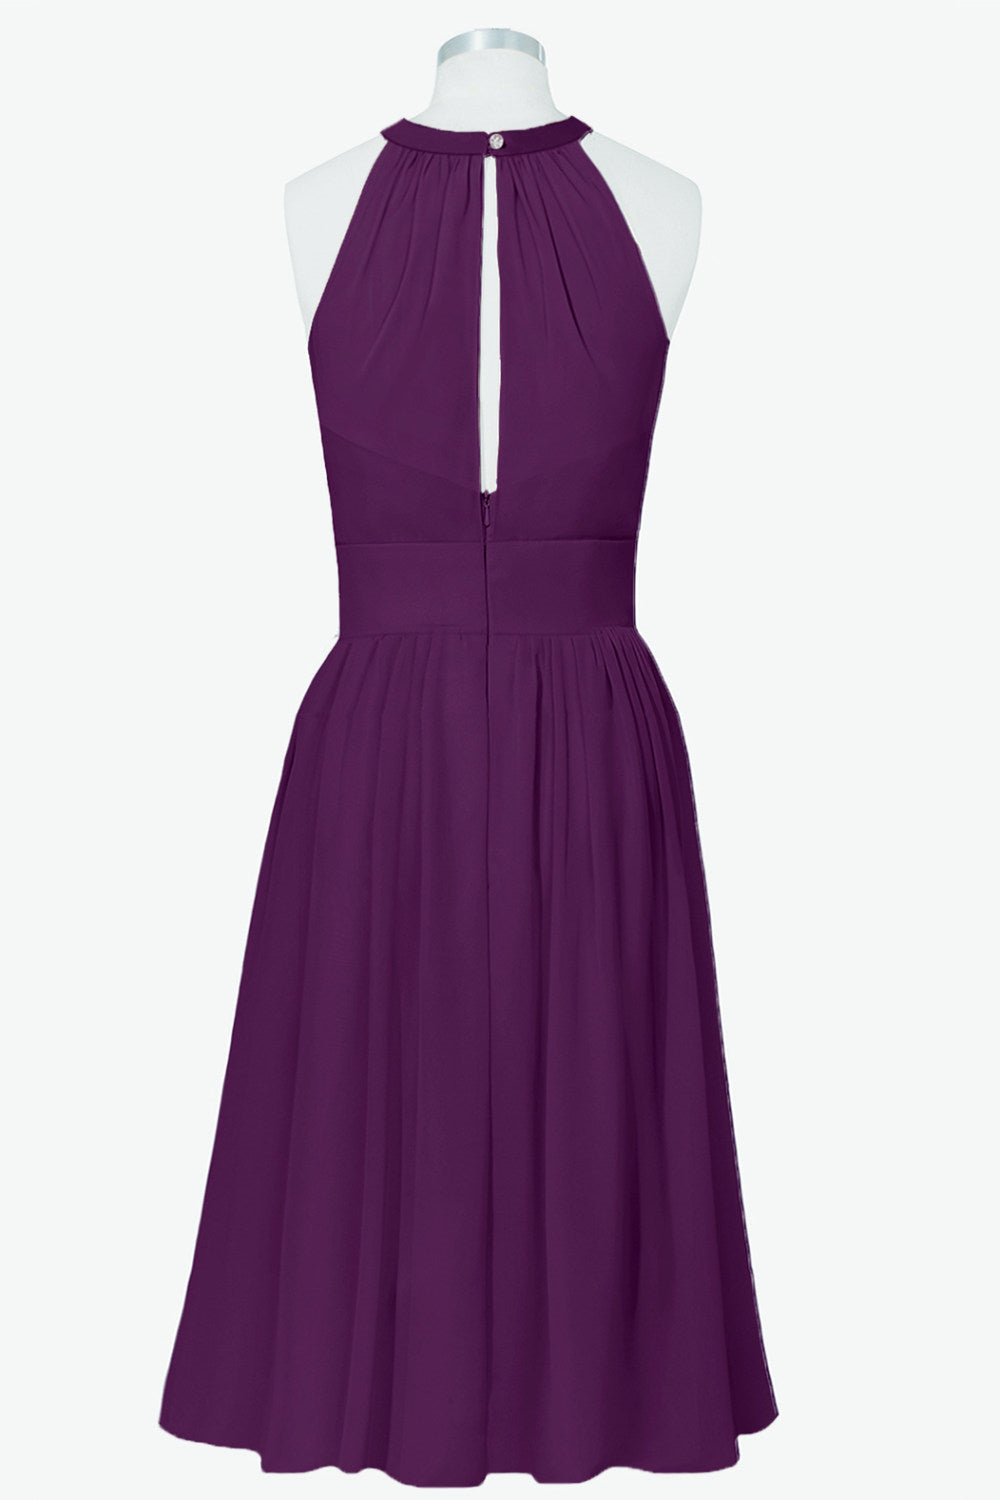 Prom Dresses For Blondes, Scoop Purple Chiffon A-line Short Bridesmaid Dress